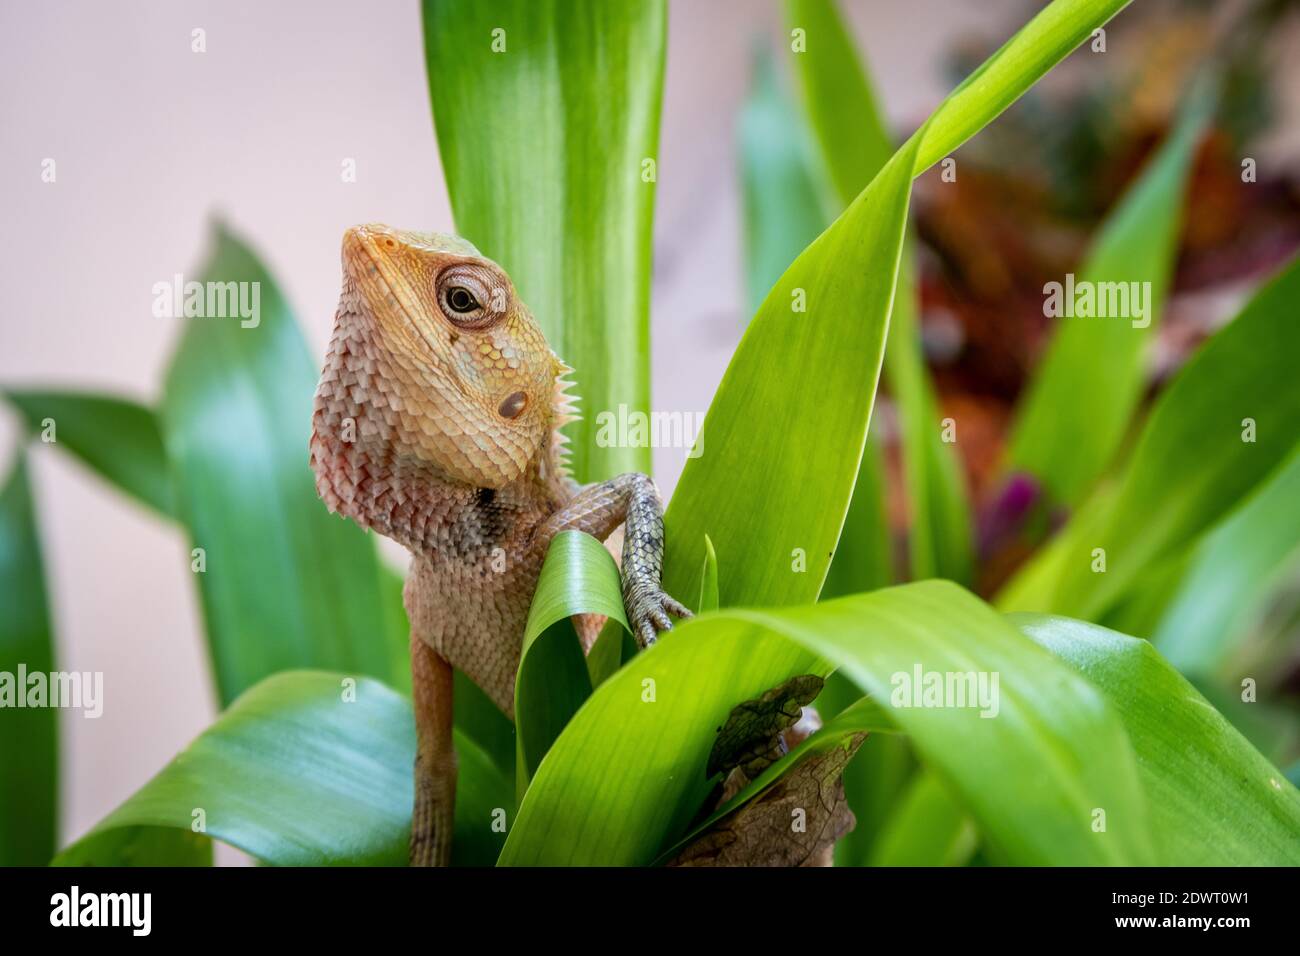 The oriental garden lizard, eastern garden lizard, bloodsucker or changeable lizard (Calotes versicolor) sitting among vivid green tropical leaves Stock Photo